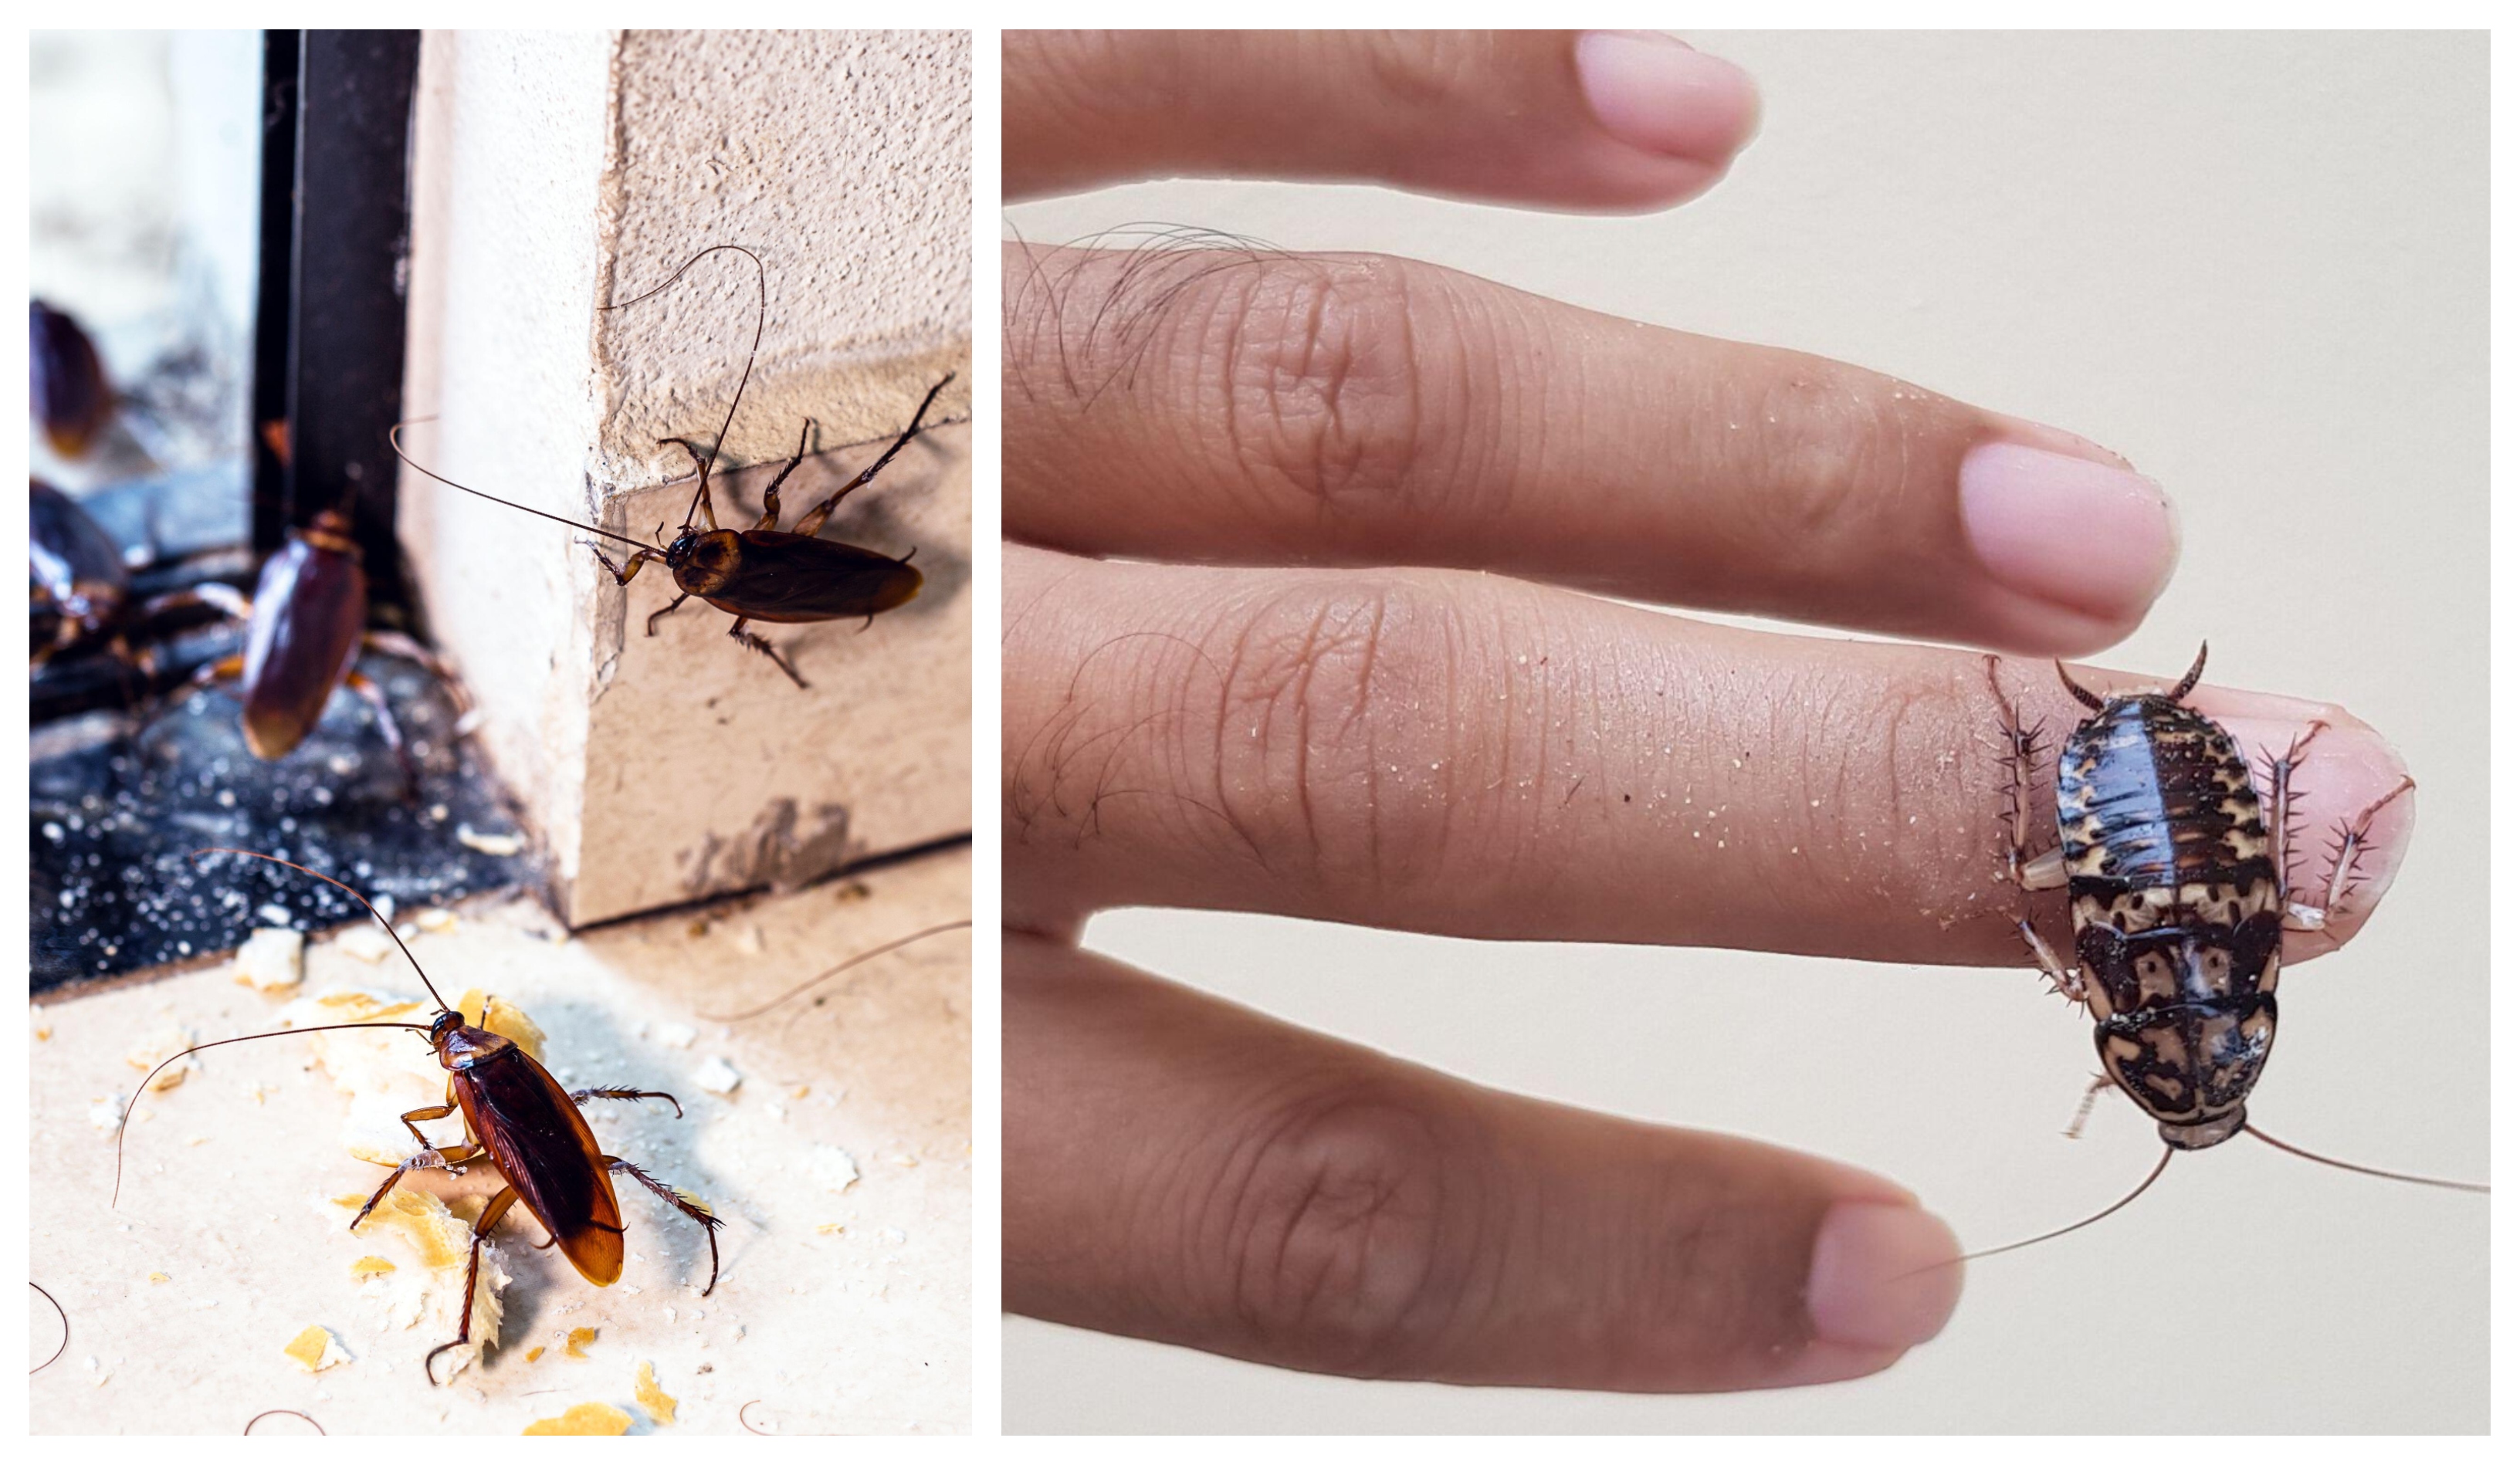 Vilka skador kan kackerlackor orsaka?